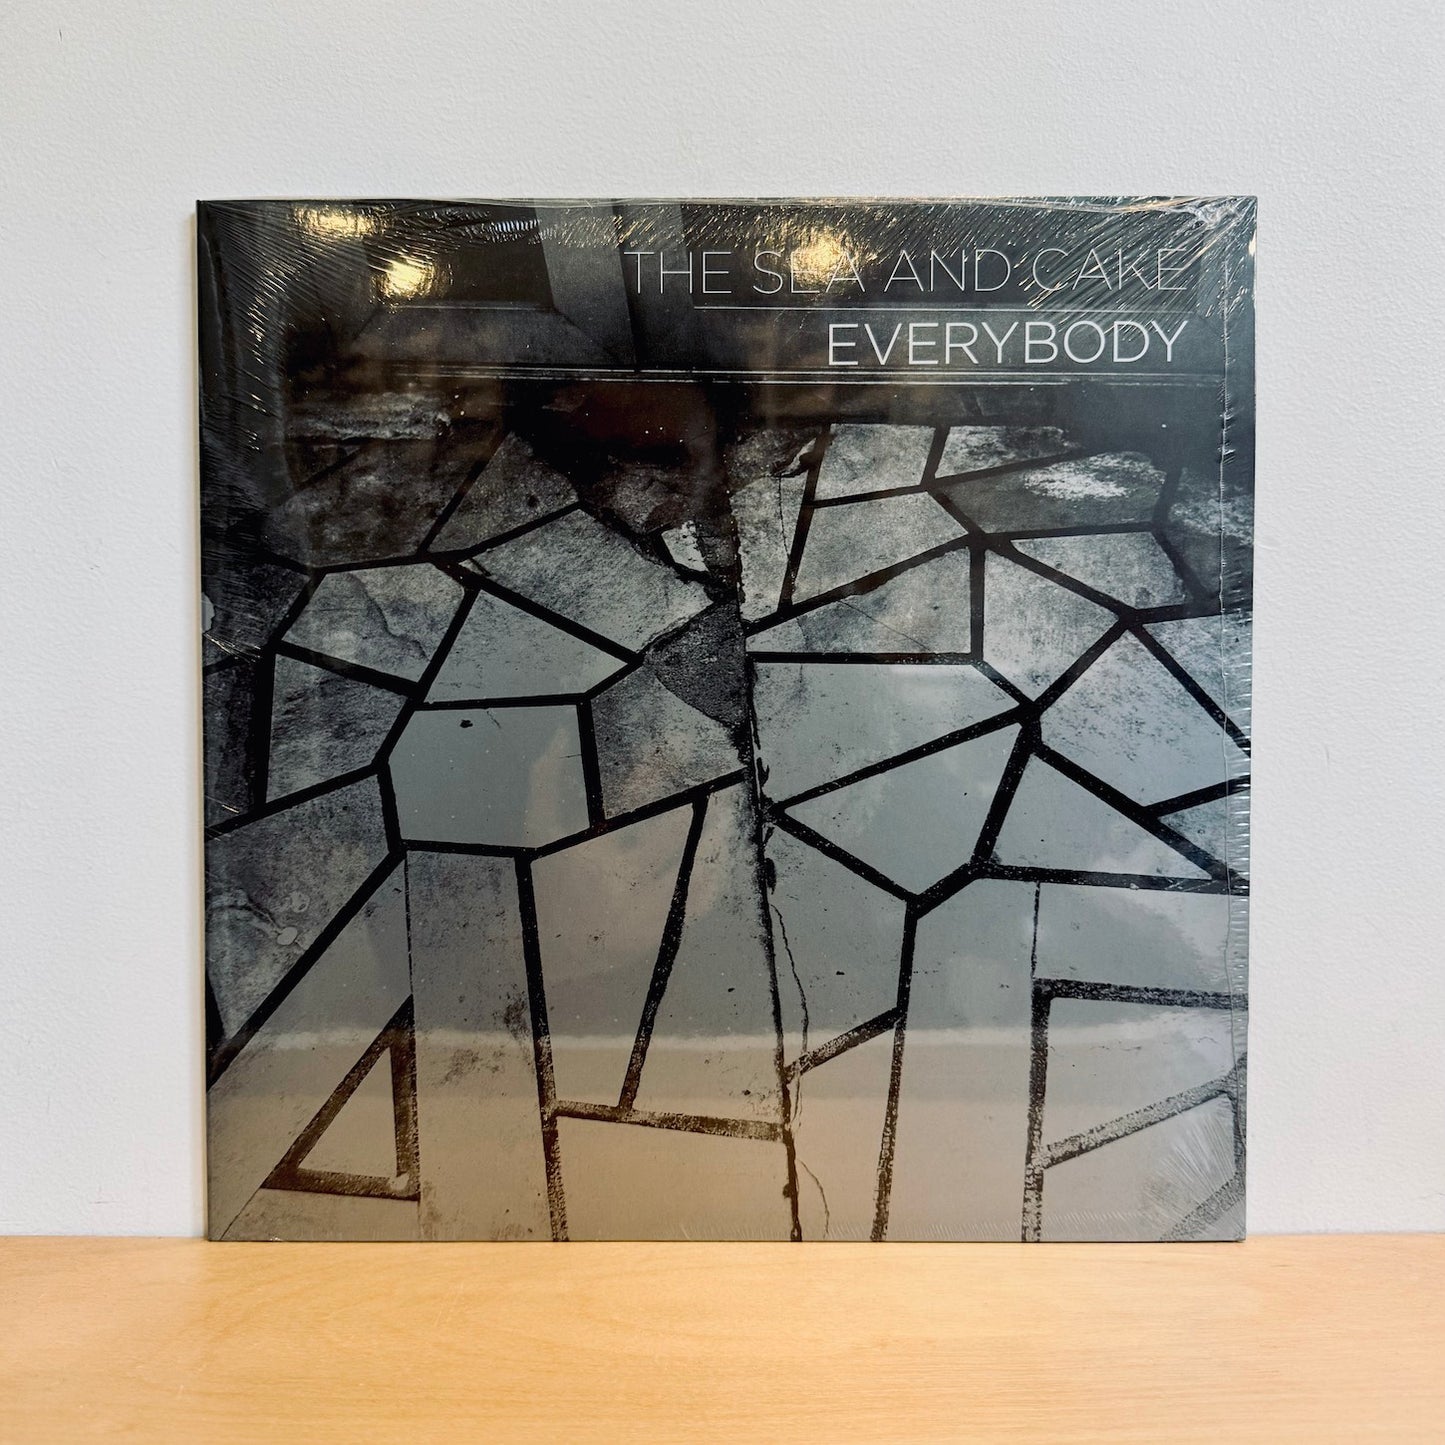 The Sea and Cake - Everybody. LP (Ltd. Translucent Aluminium Edition)